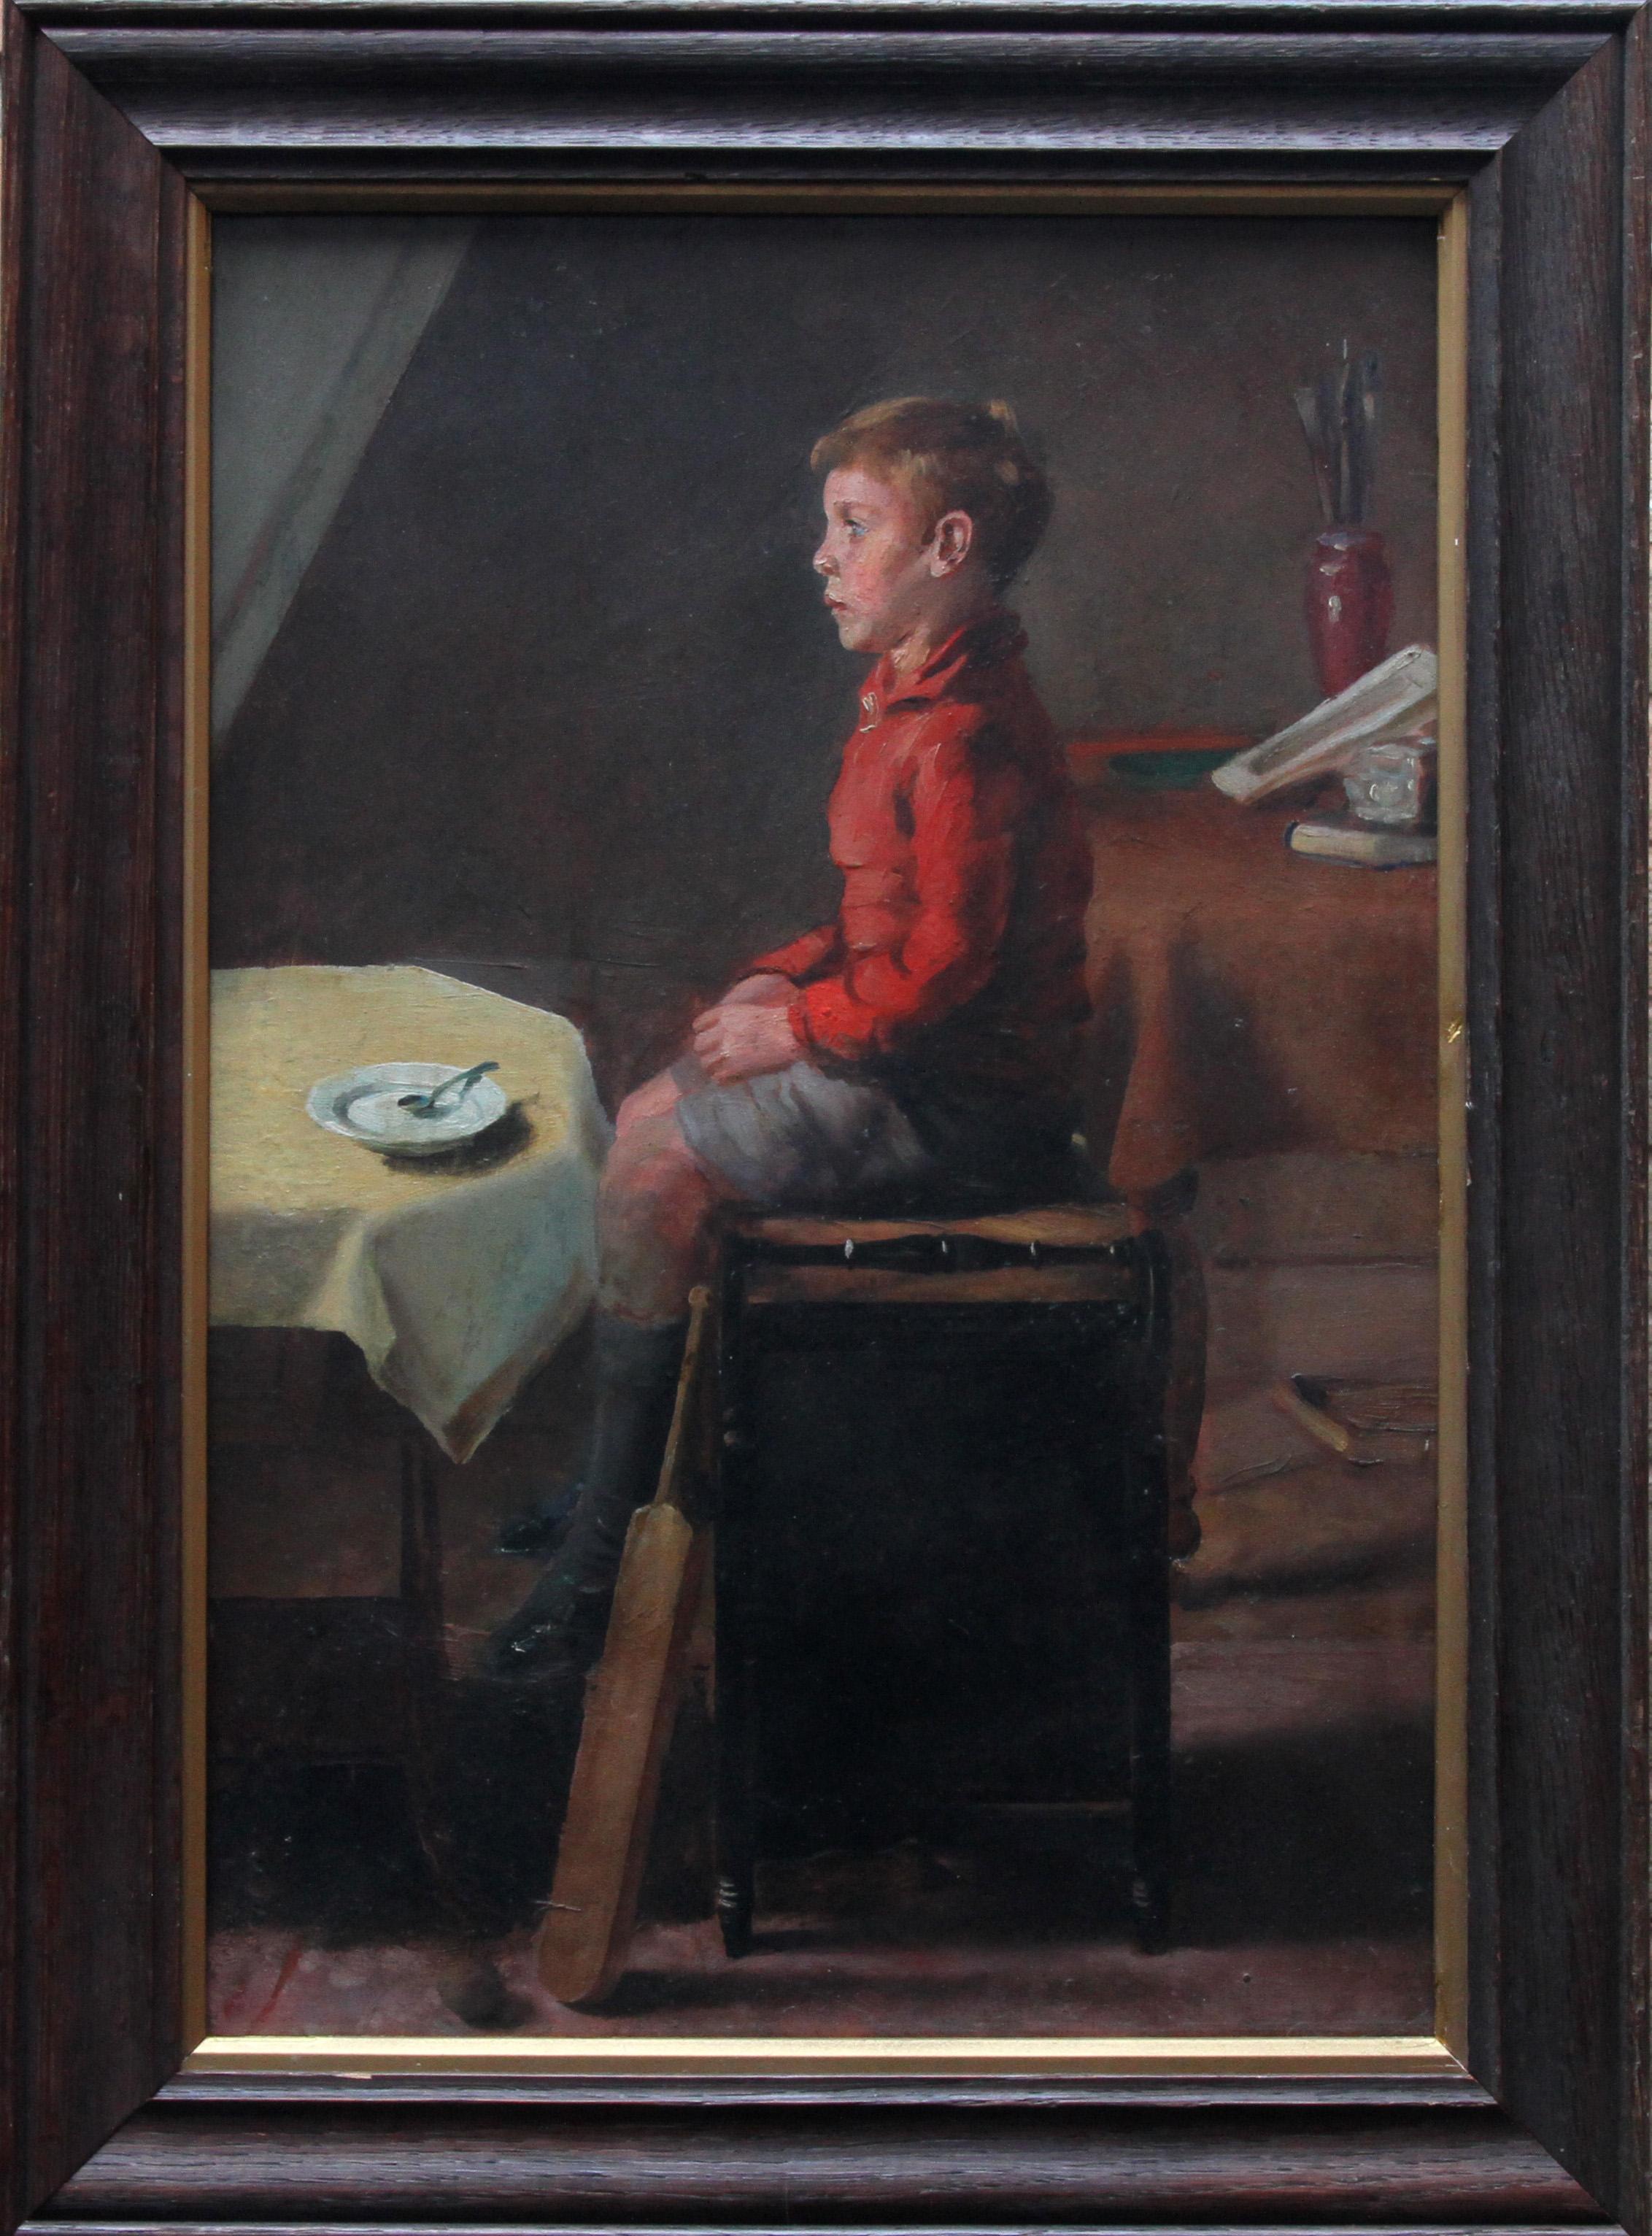 Unknown Portrait Painting - Schoolboy with Cricket Bat - British Slade School art 30's portrait oil painting